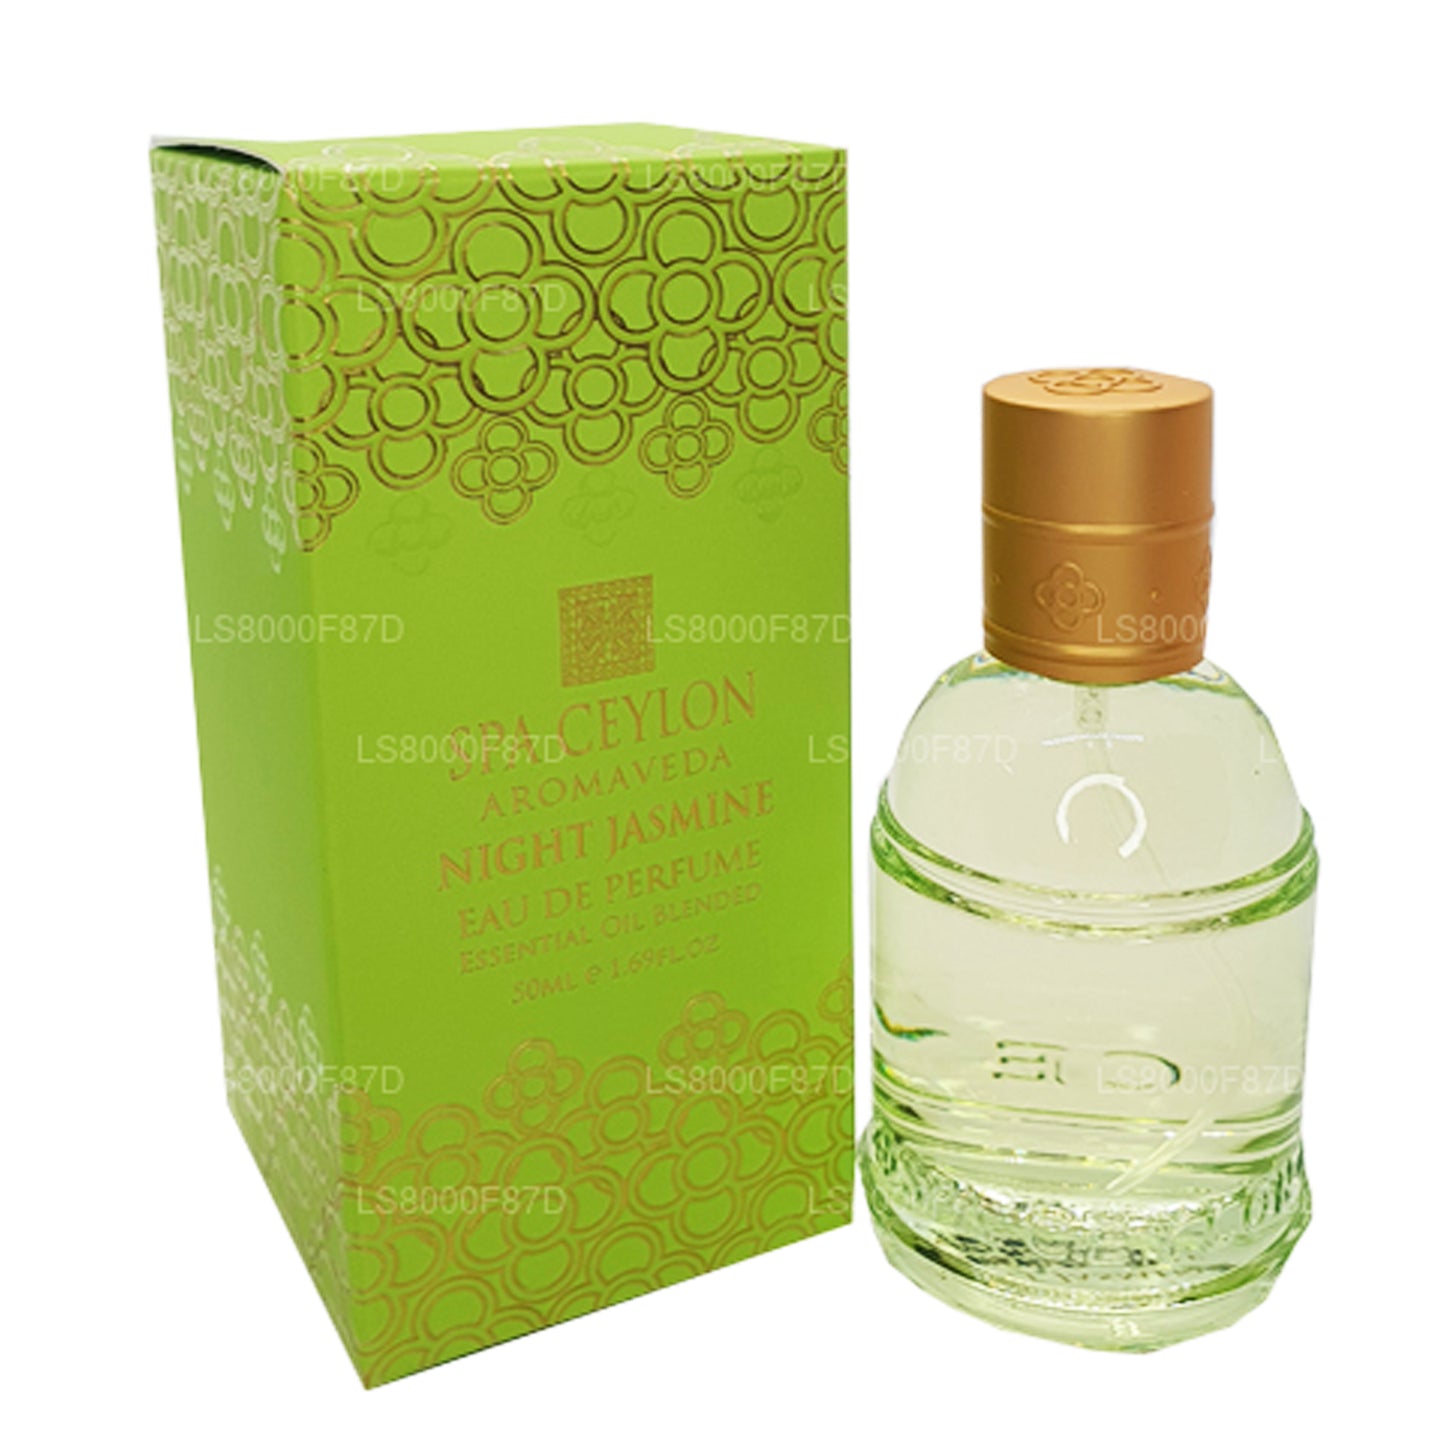 Spa Ceylon Night Jasmine Eau De Perfume etherische olie gemengd (50 ml)